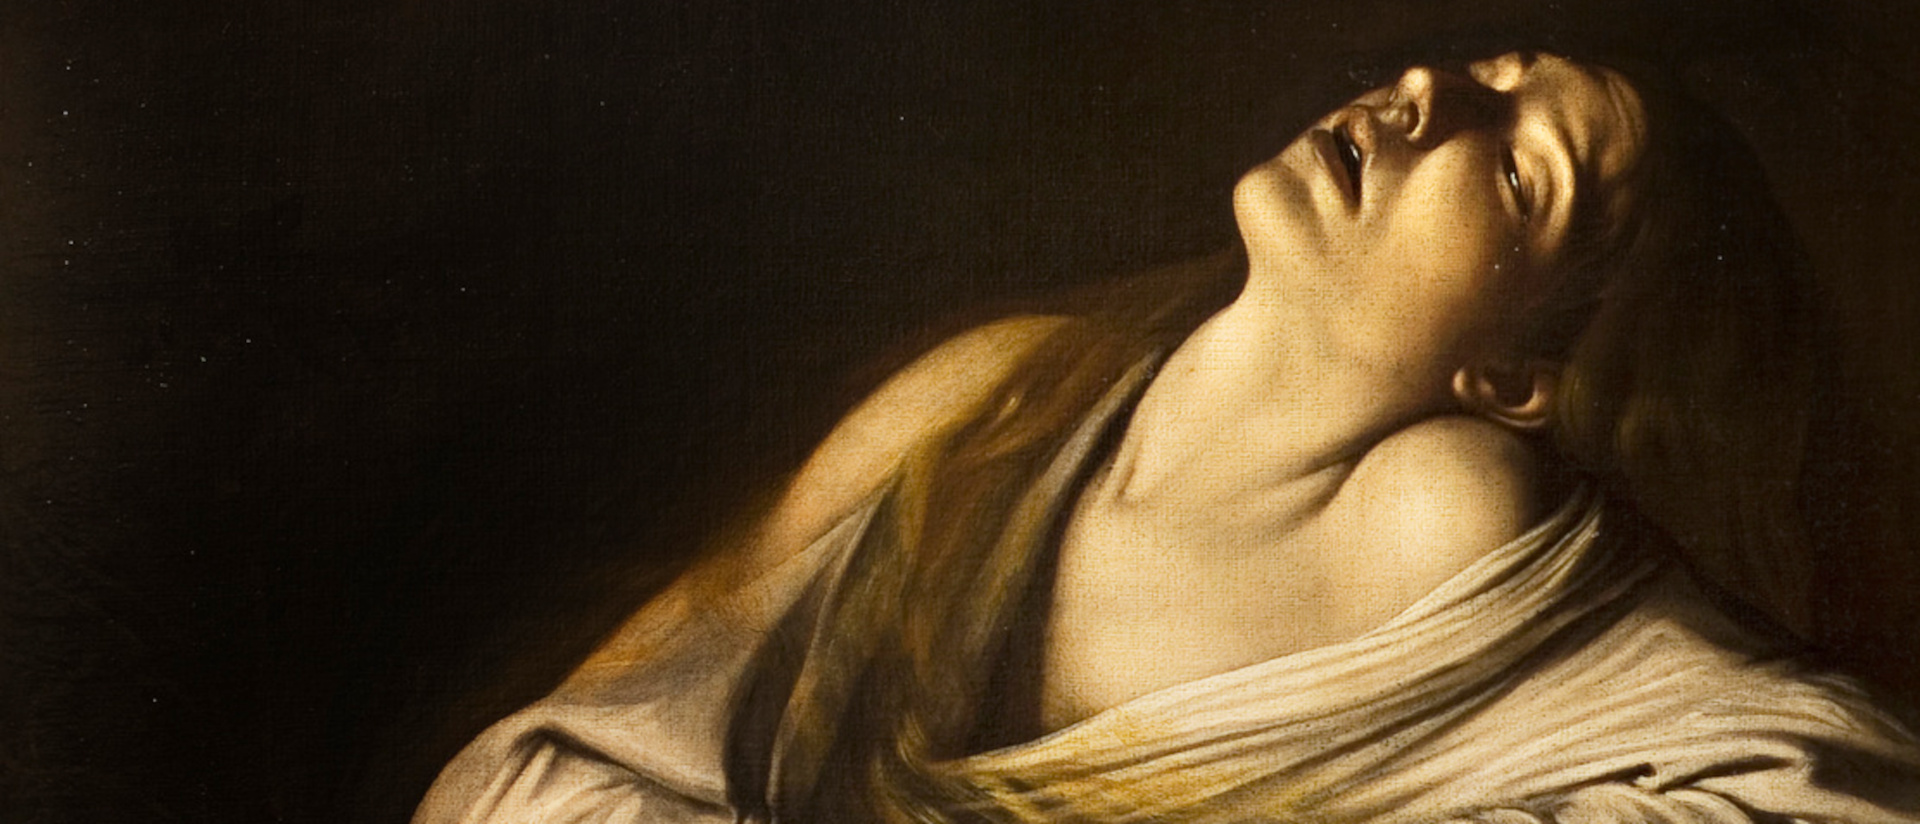 Caravaggio, eigentl. Michelangelo Merisi; .1571-1610:  "Die heilige Maria Magdalena in Extase", (1606), Rom, Privatsammlung. (KEYSTONE/akg-images/akg-images / Cameraphoto)